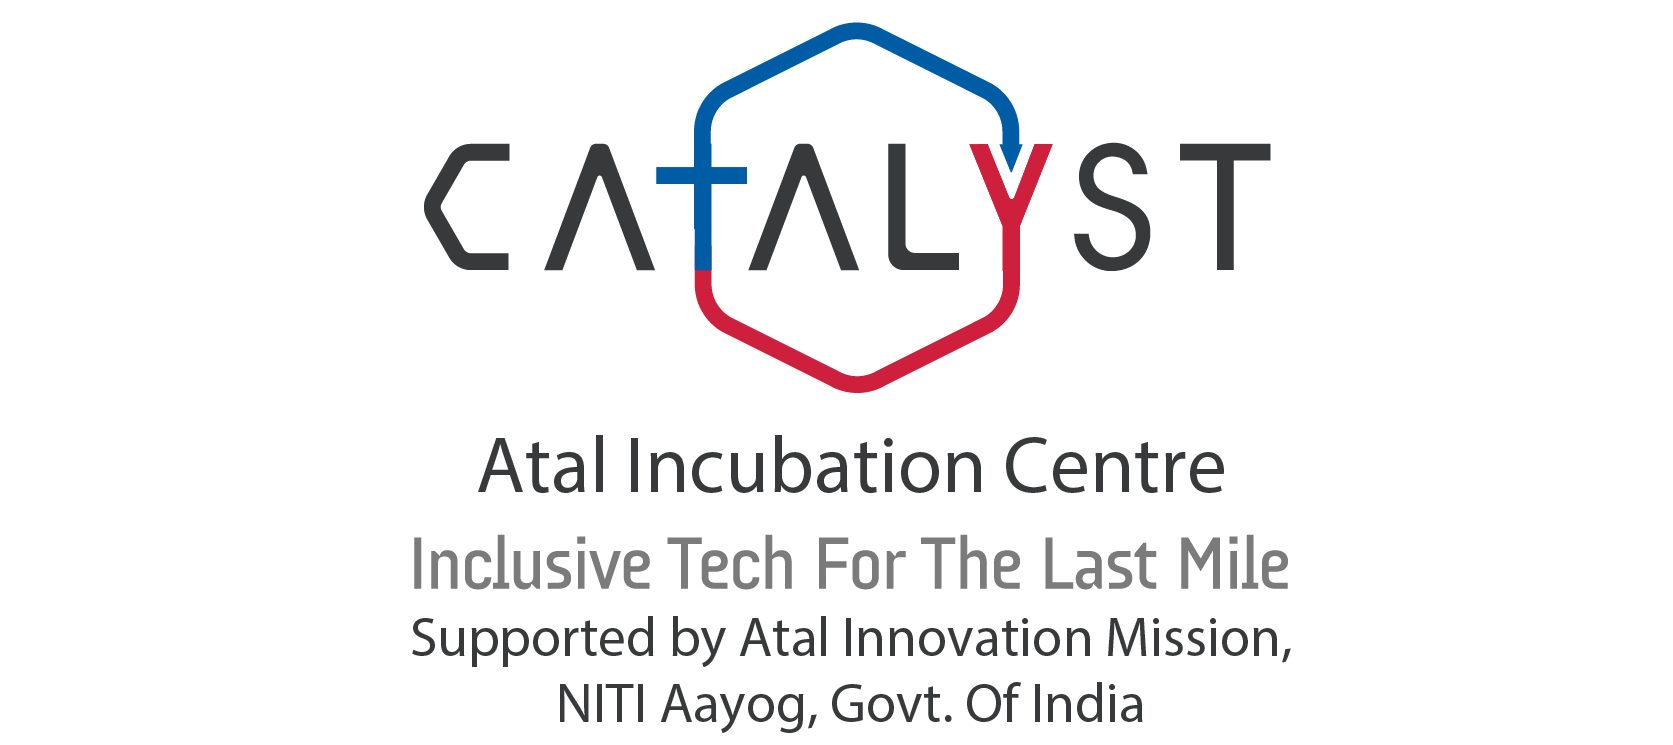 Catalyst Atal Incubation Centre